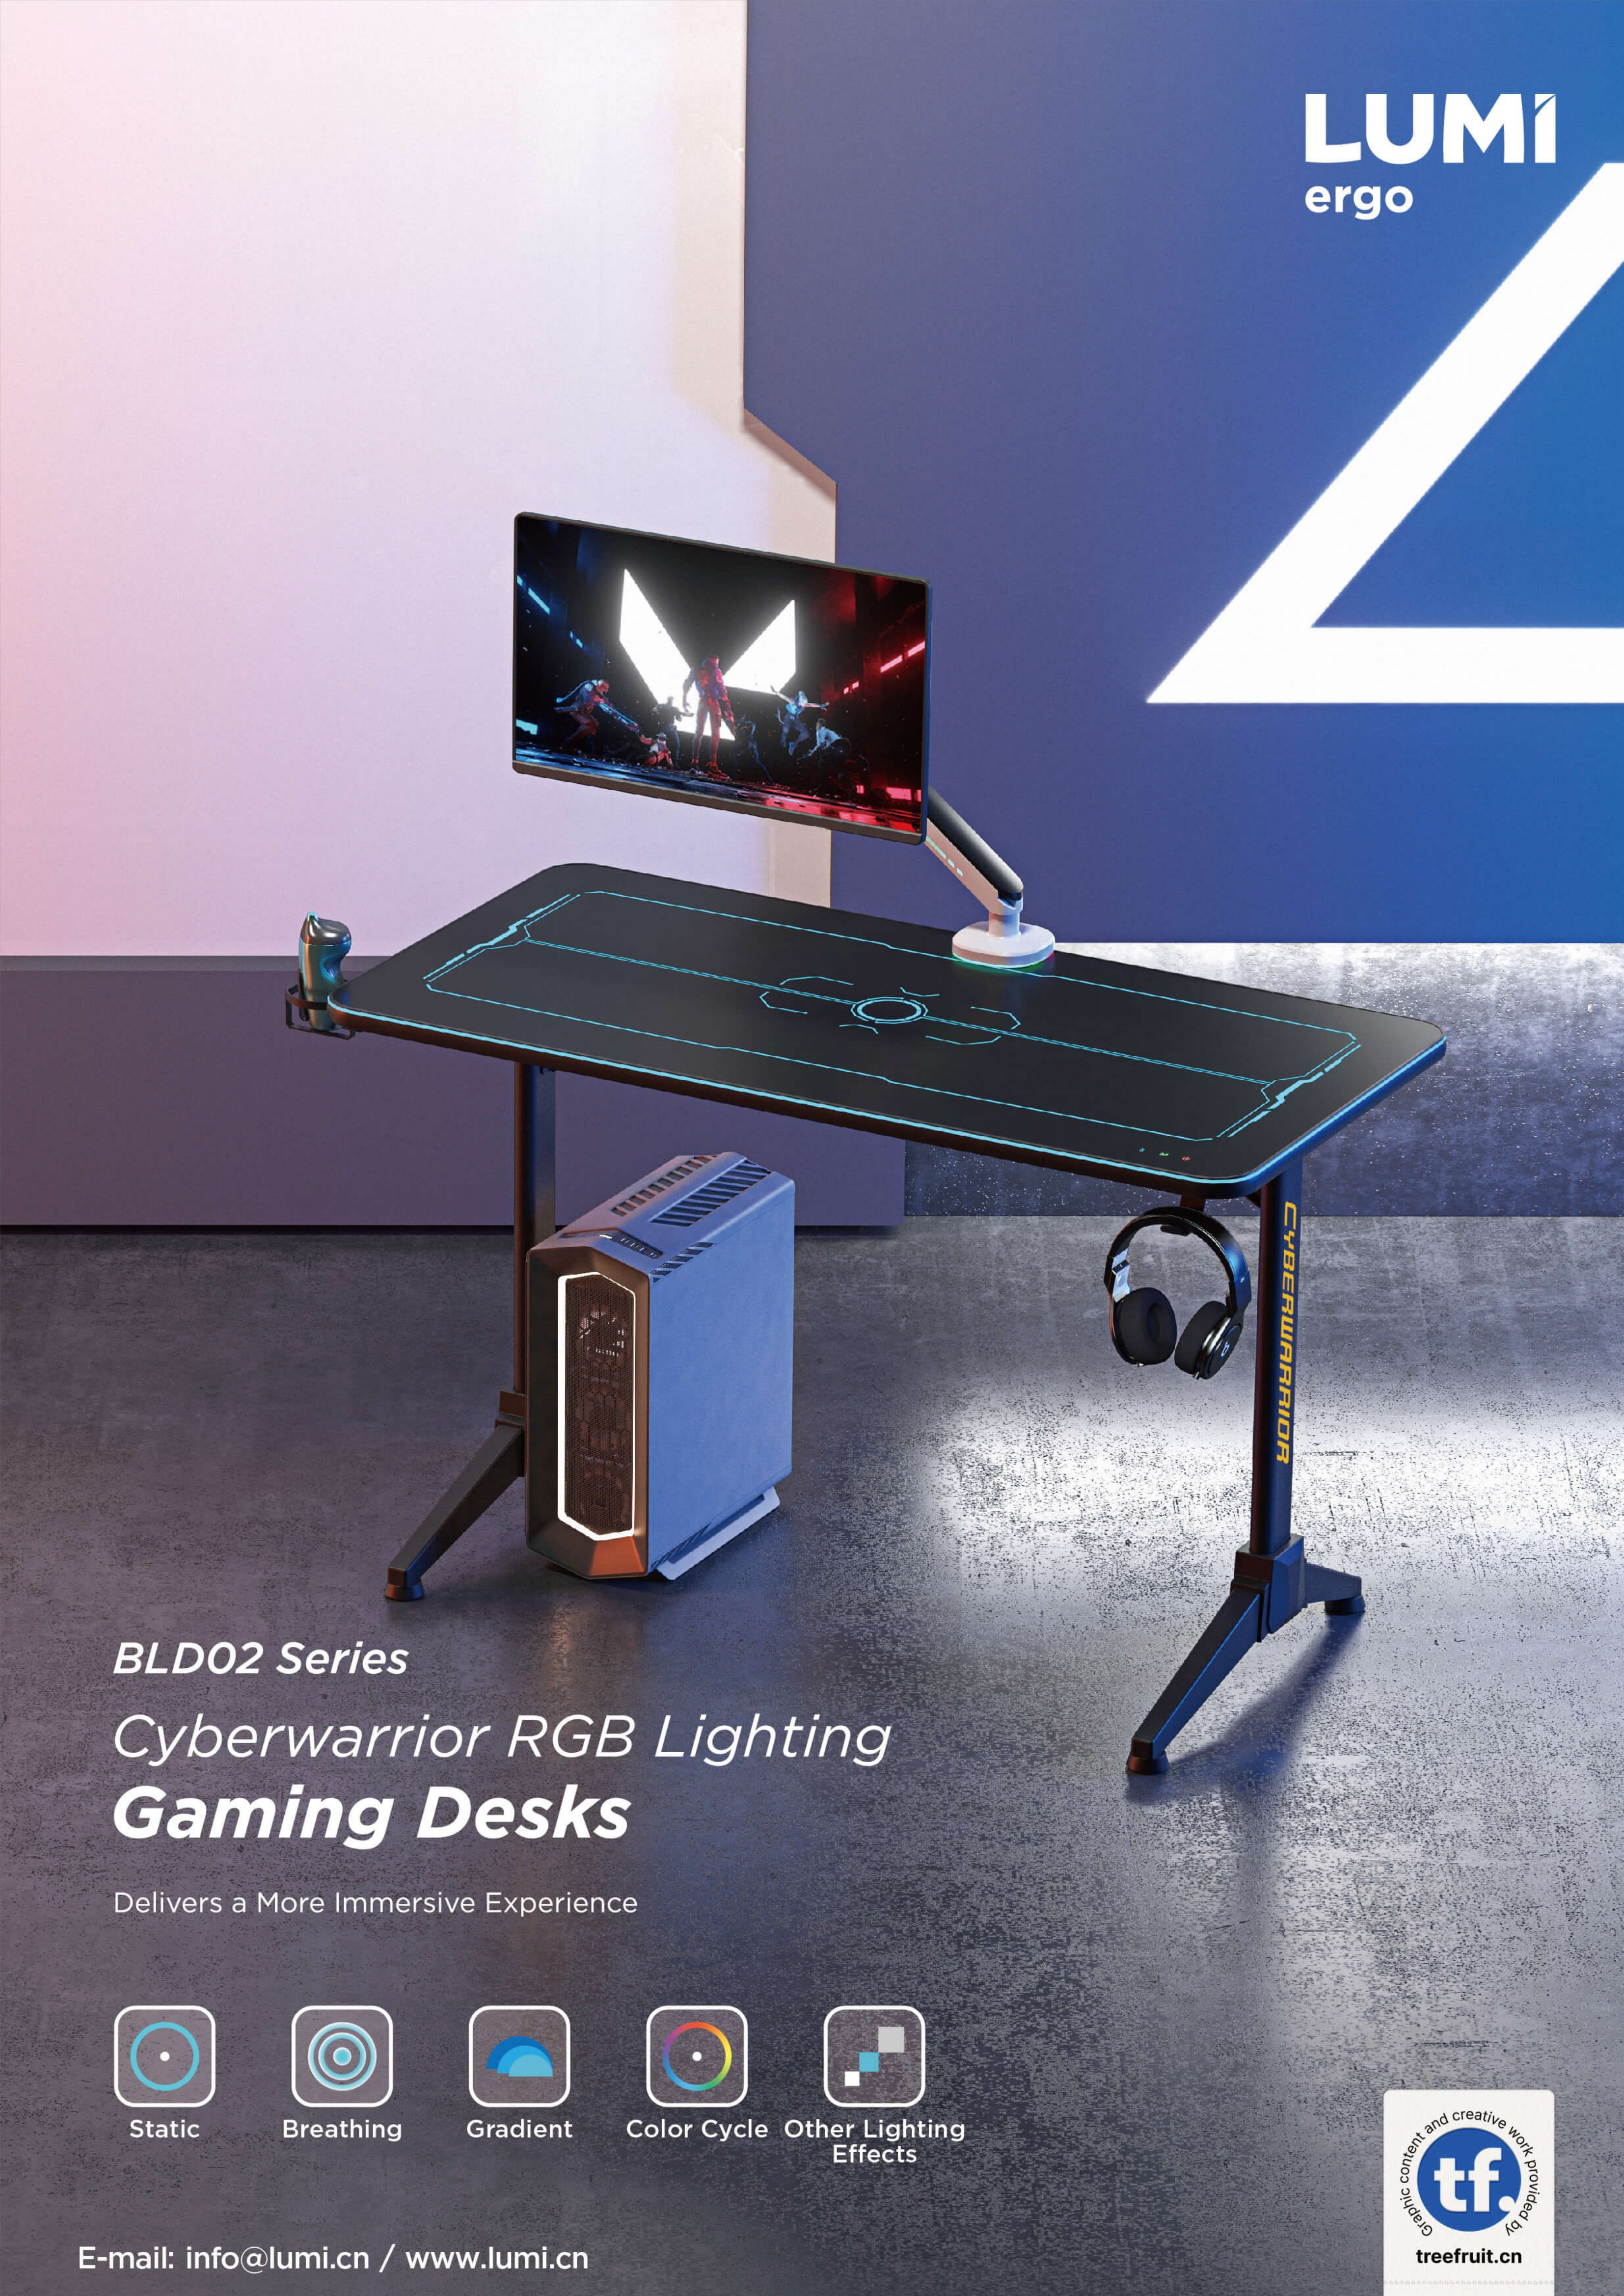 BLD02 Series Cyberwarrior RGB Lighting Gaming Desks